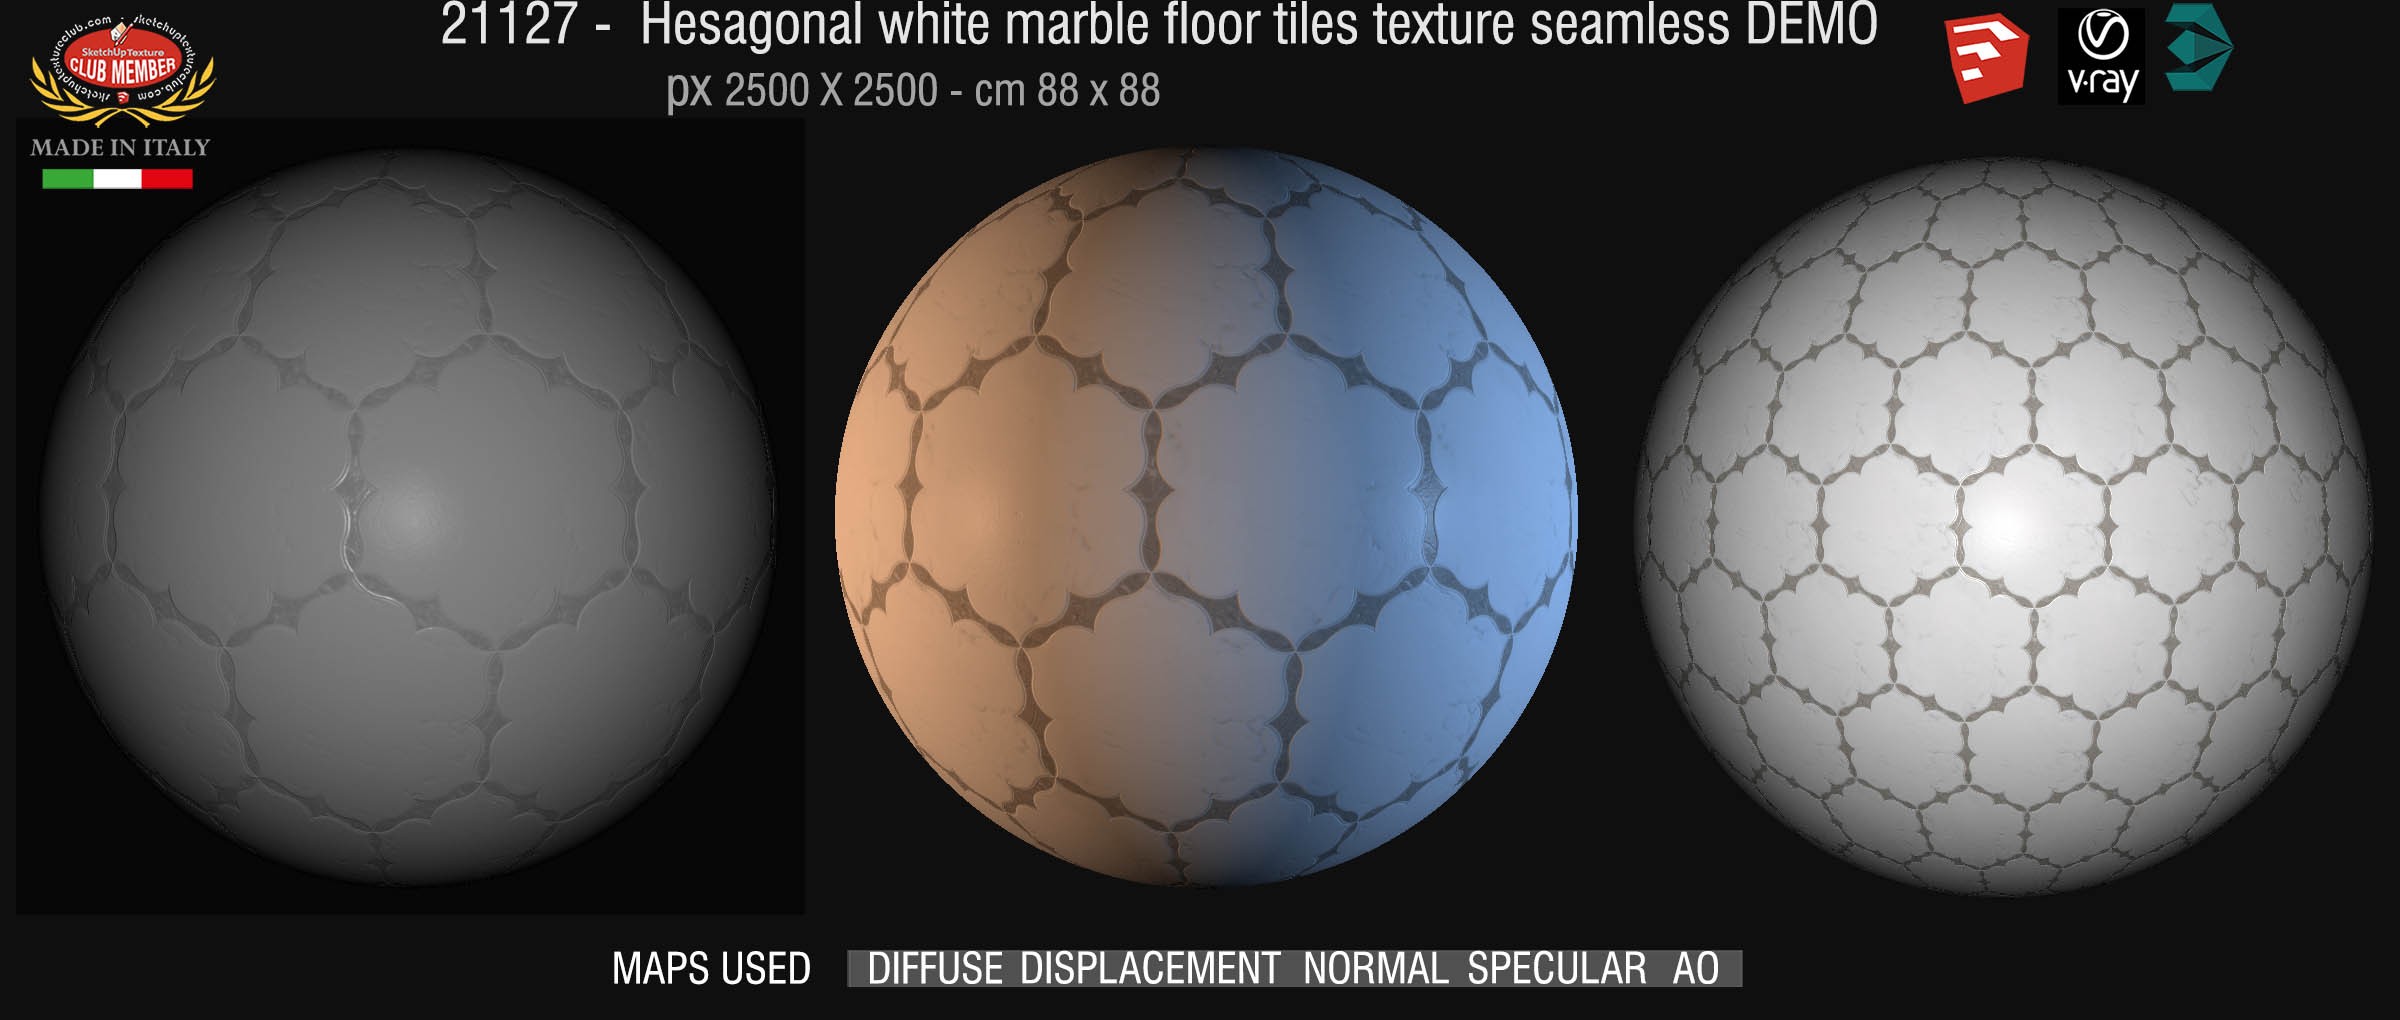 21127  Hexagonal white marble floor tile texture seamless + maps DEMO